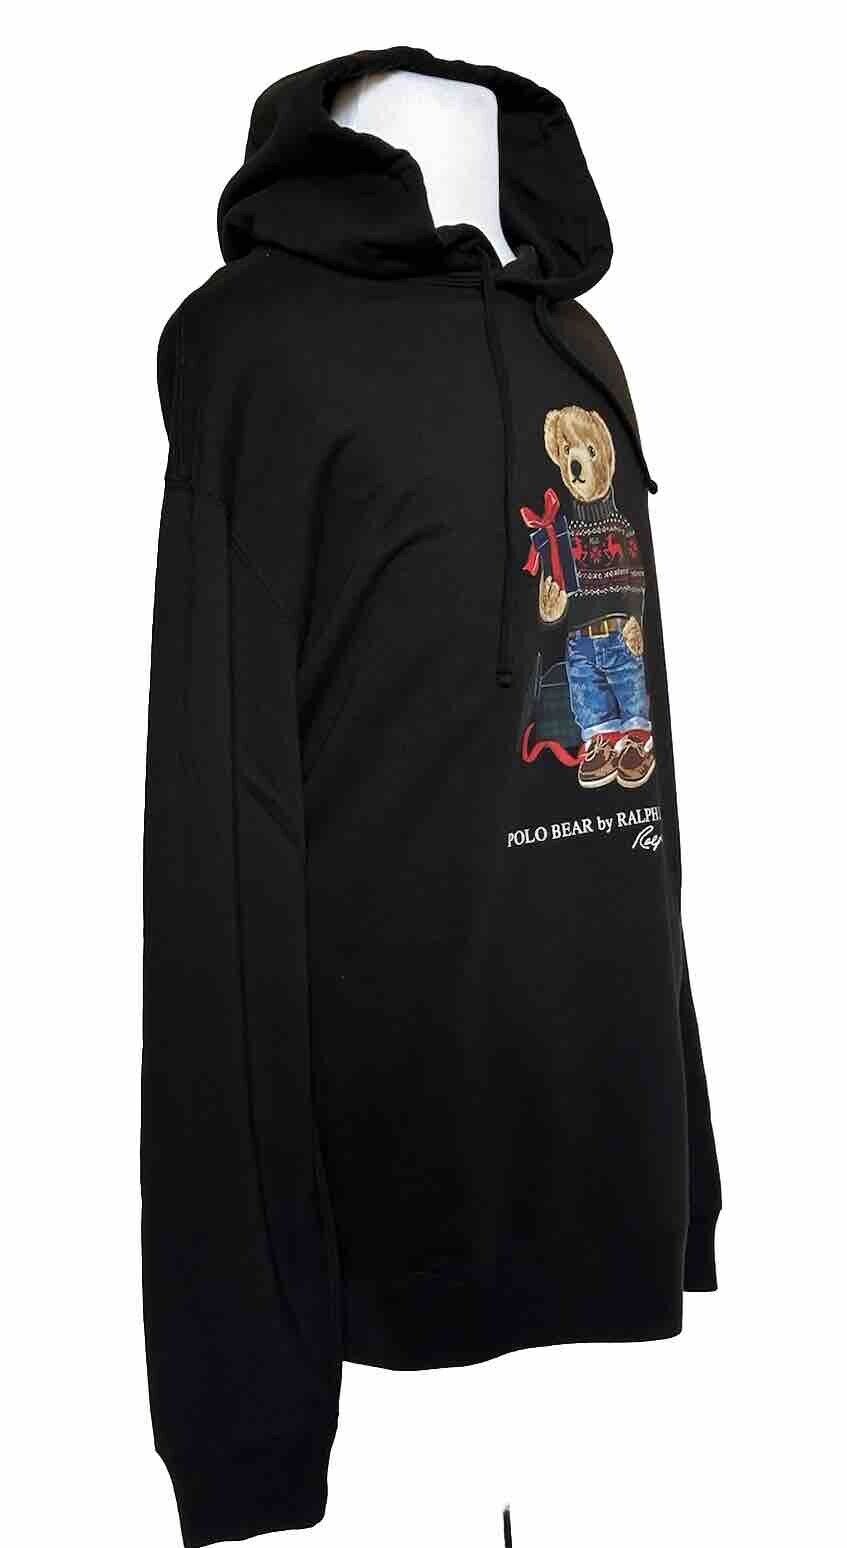 NWT $188 Polo Ralph Lauren Holiday Bear Sweatshirt with Hoodie Black 3XLT/3TGL